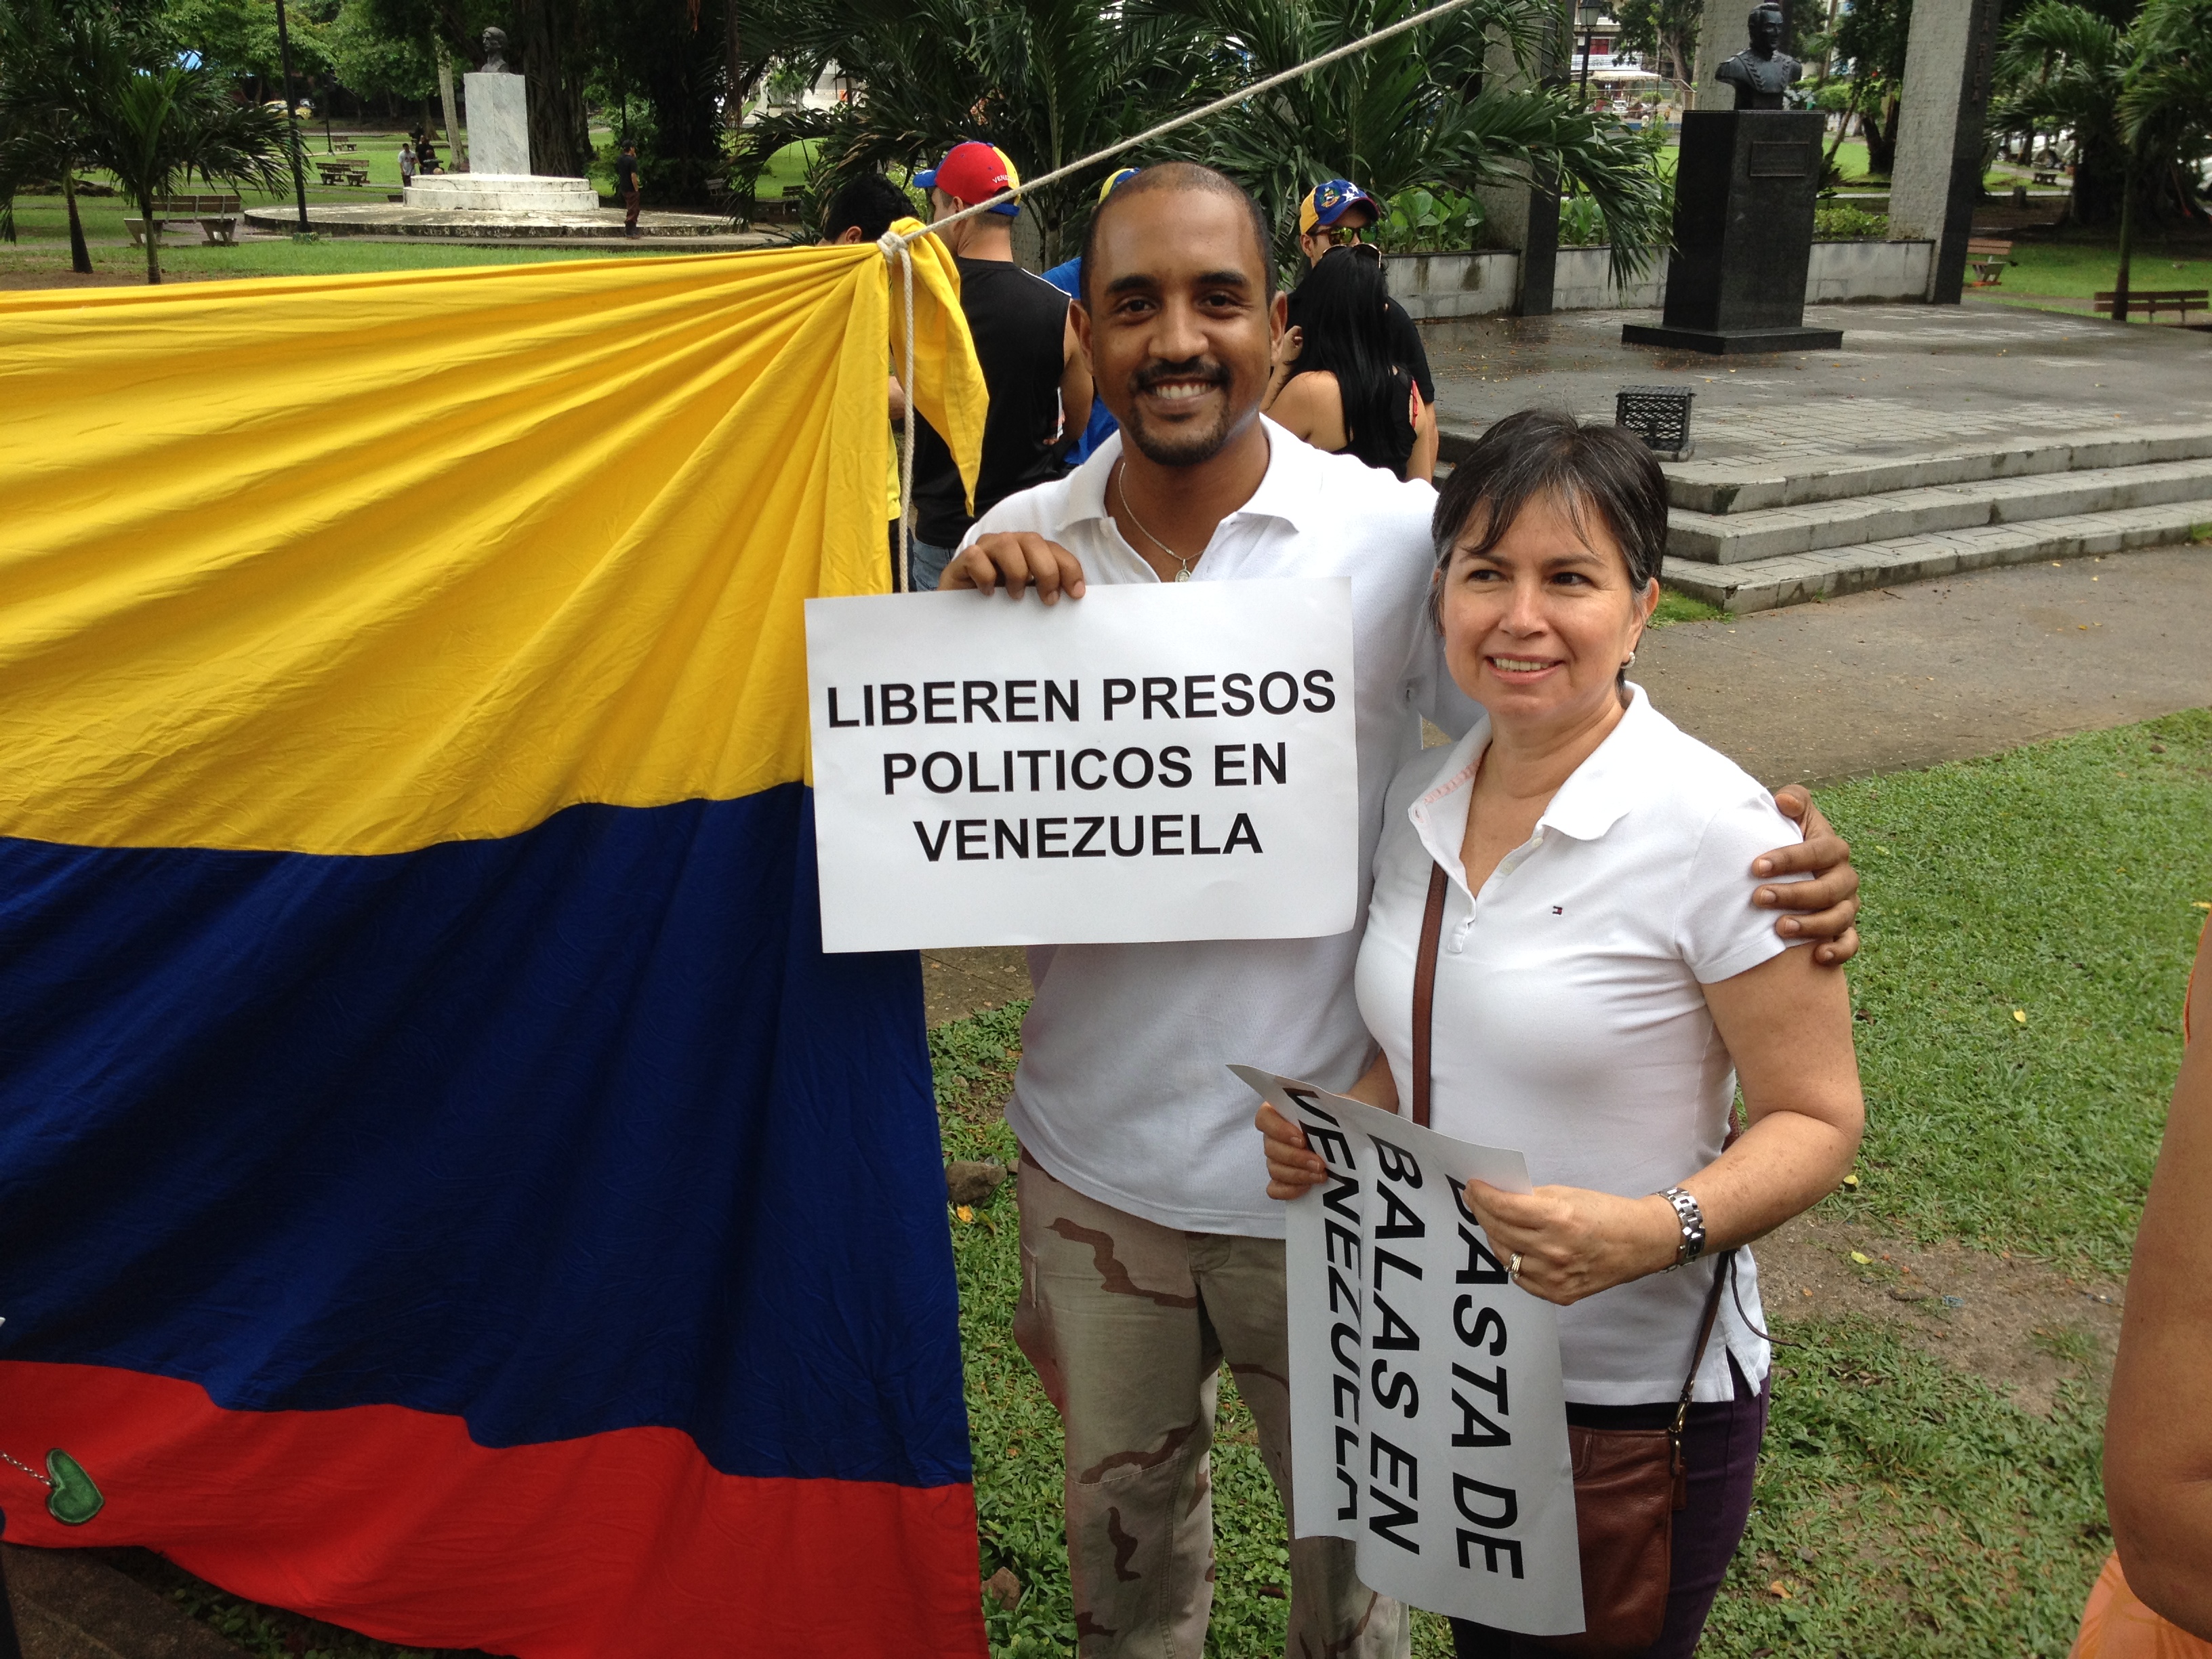 Panamanian Rey Feurtado participated in the demonstation against Maduro's repression in Venezuela